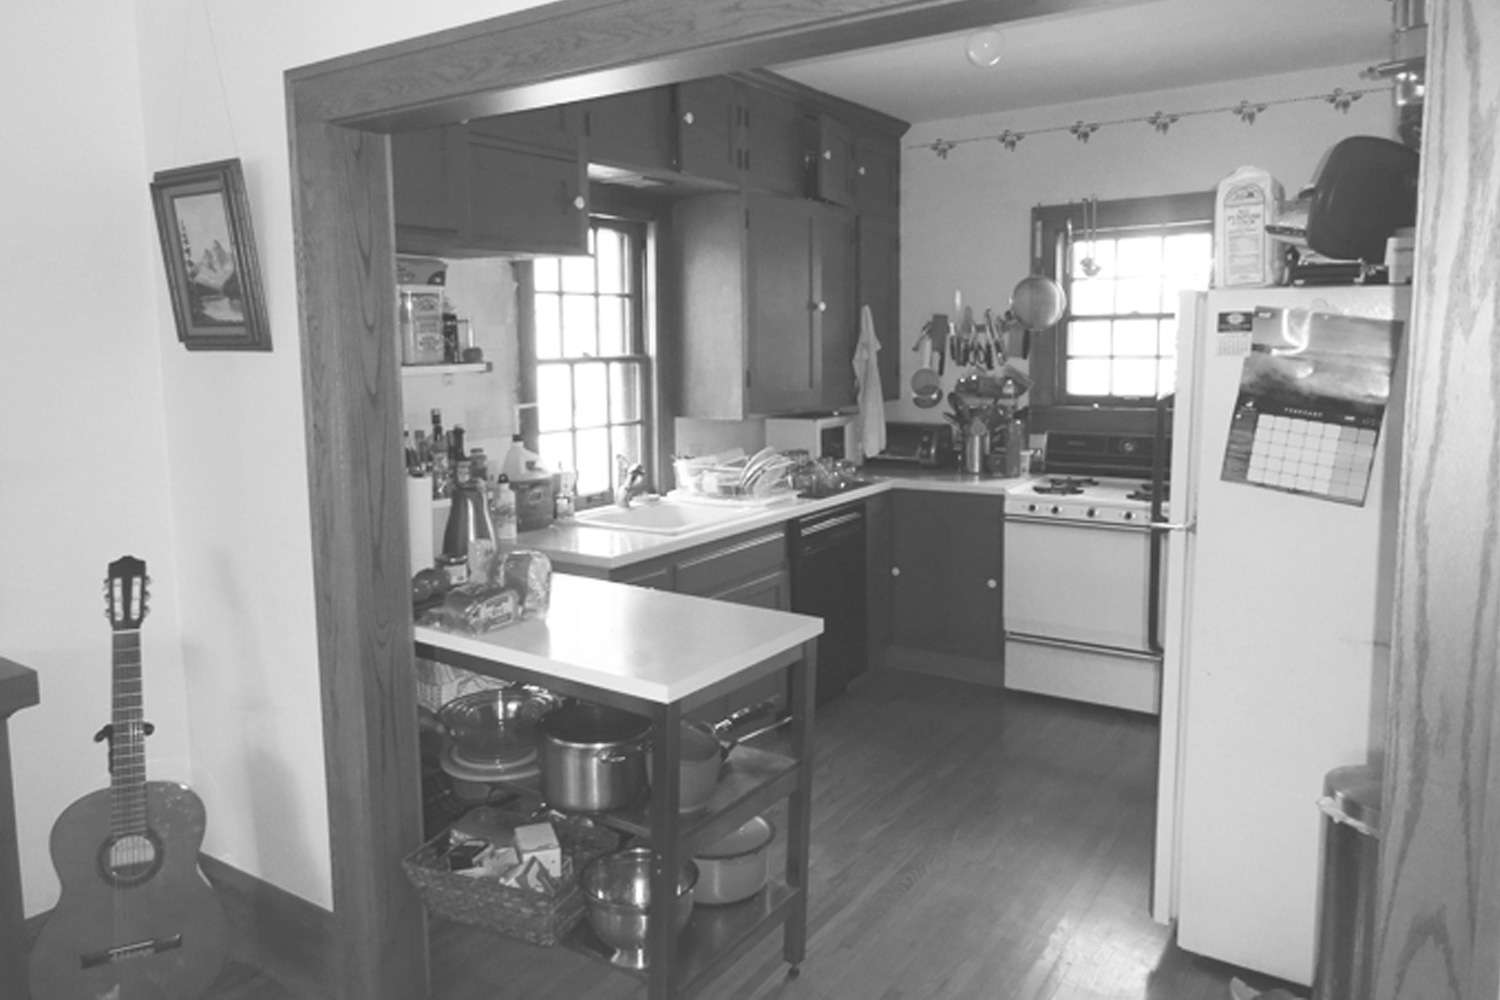 https://benquieandsons.com/wp-content/uploads/2021/02/07-modern-kitchen-before.jpg